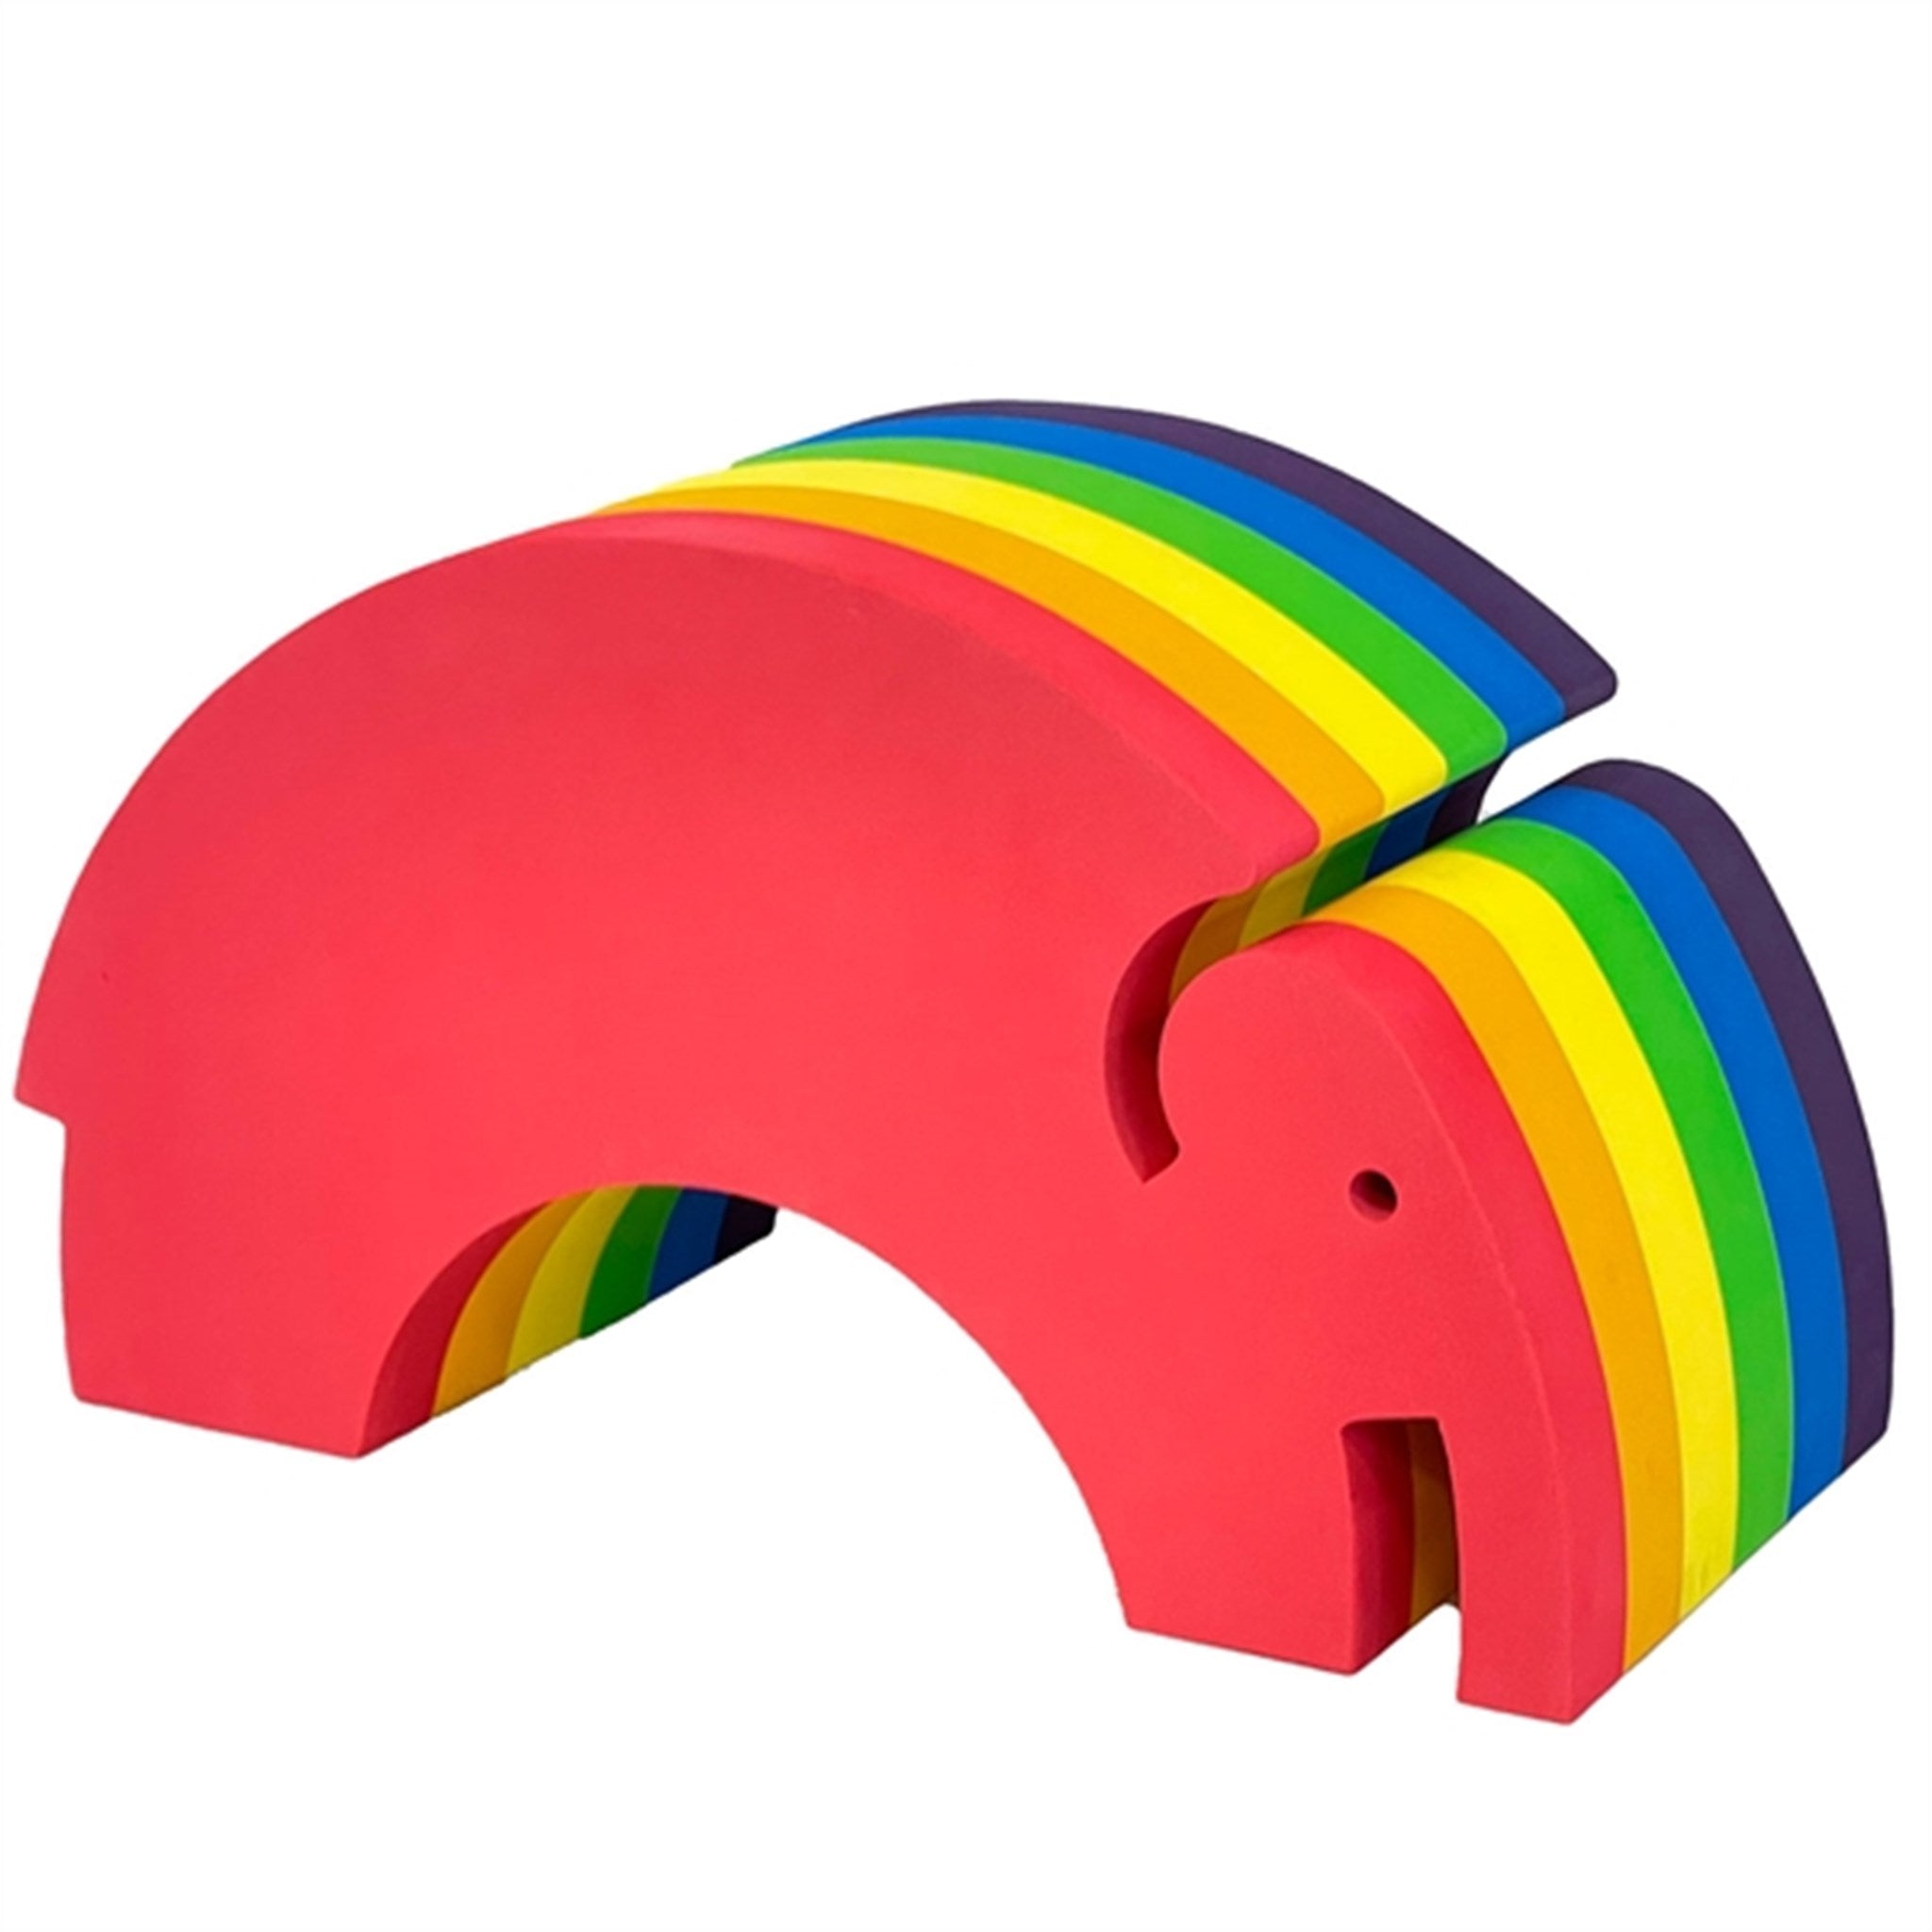 bObles Elephant L 24 Rainbow